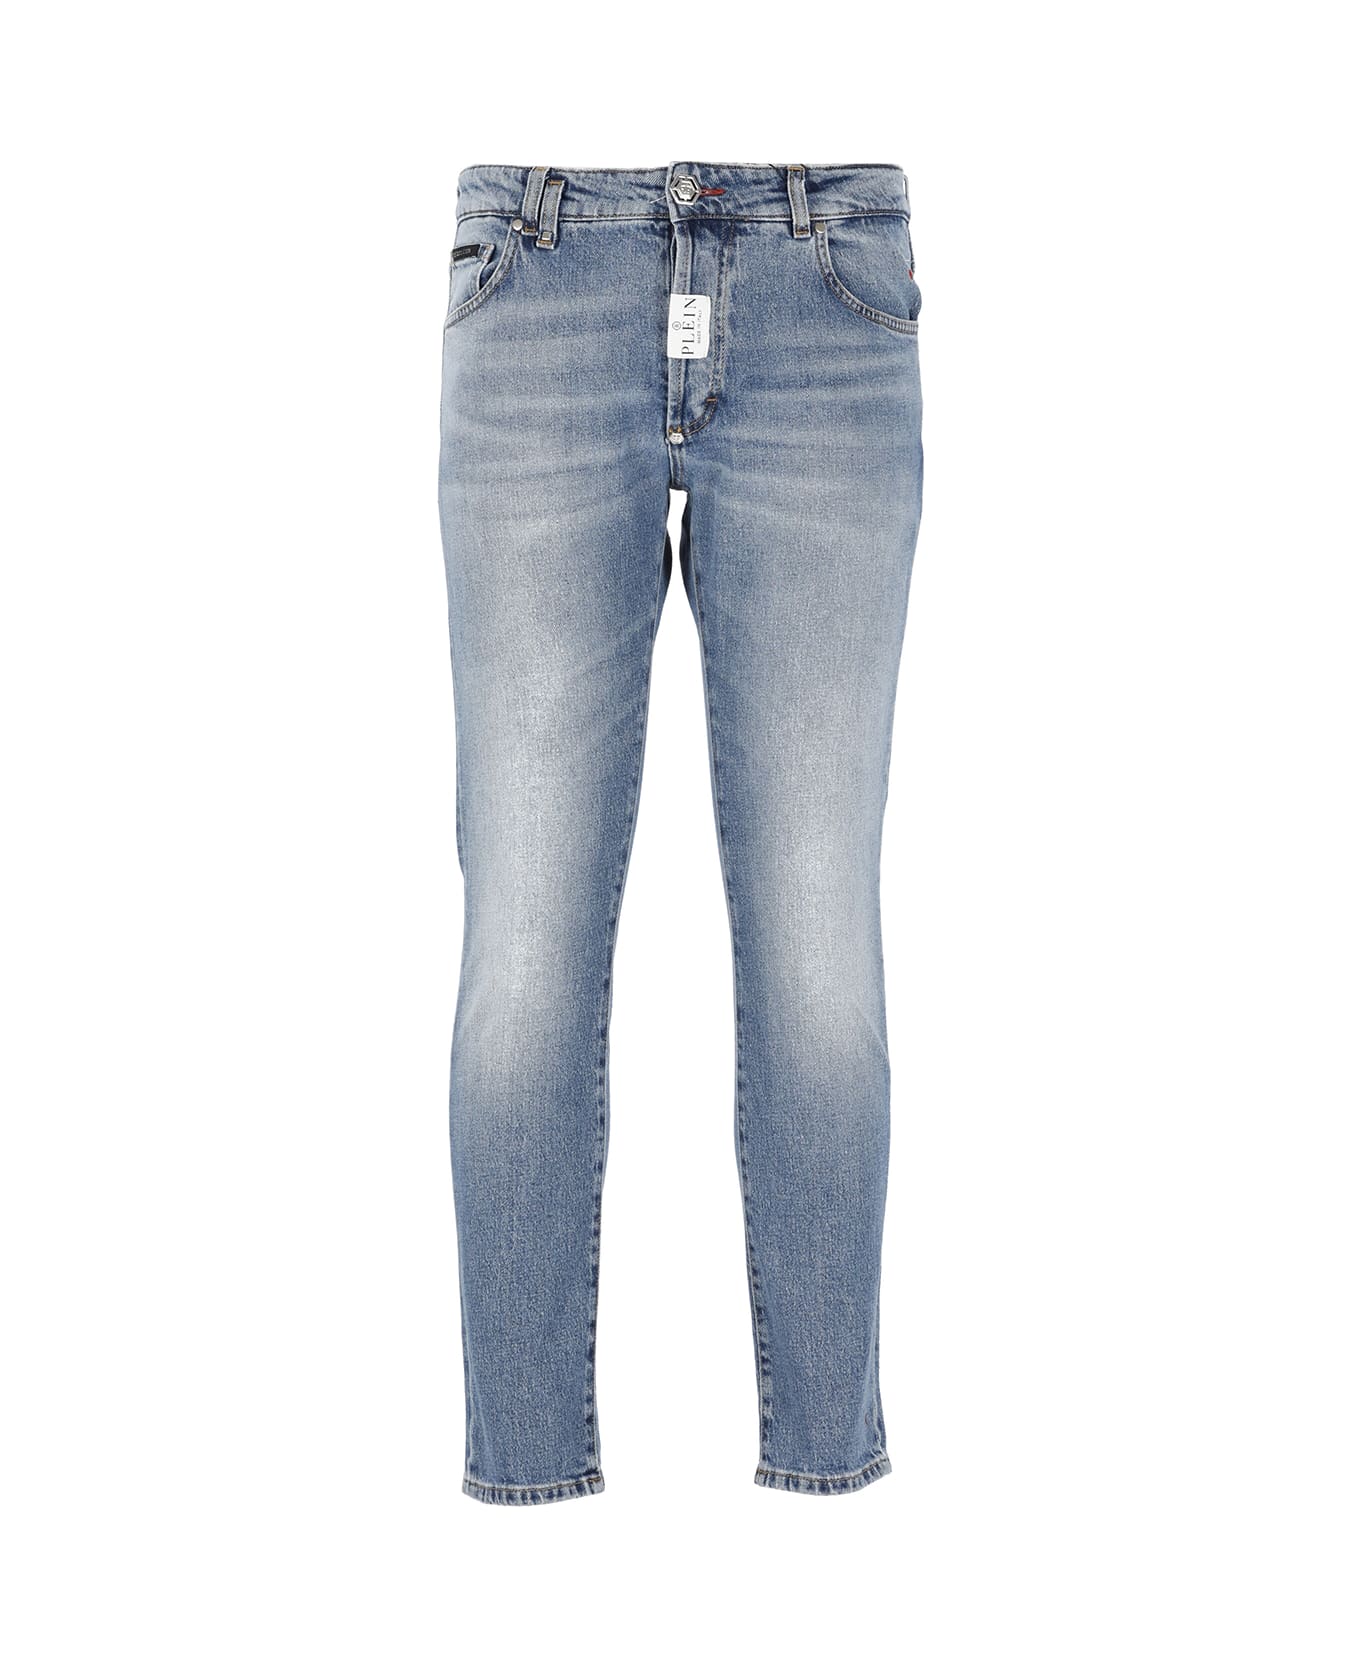 Philipp Plein Cotton Jeans - Blue デニム